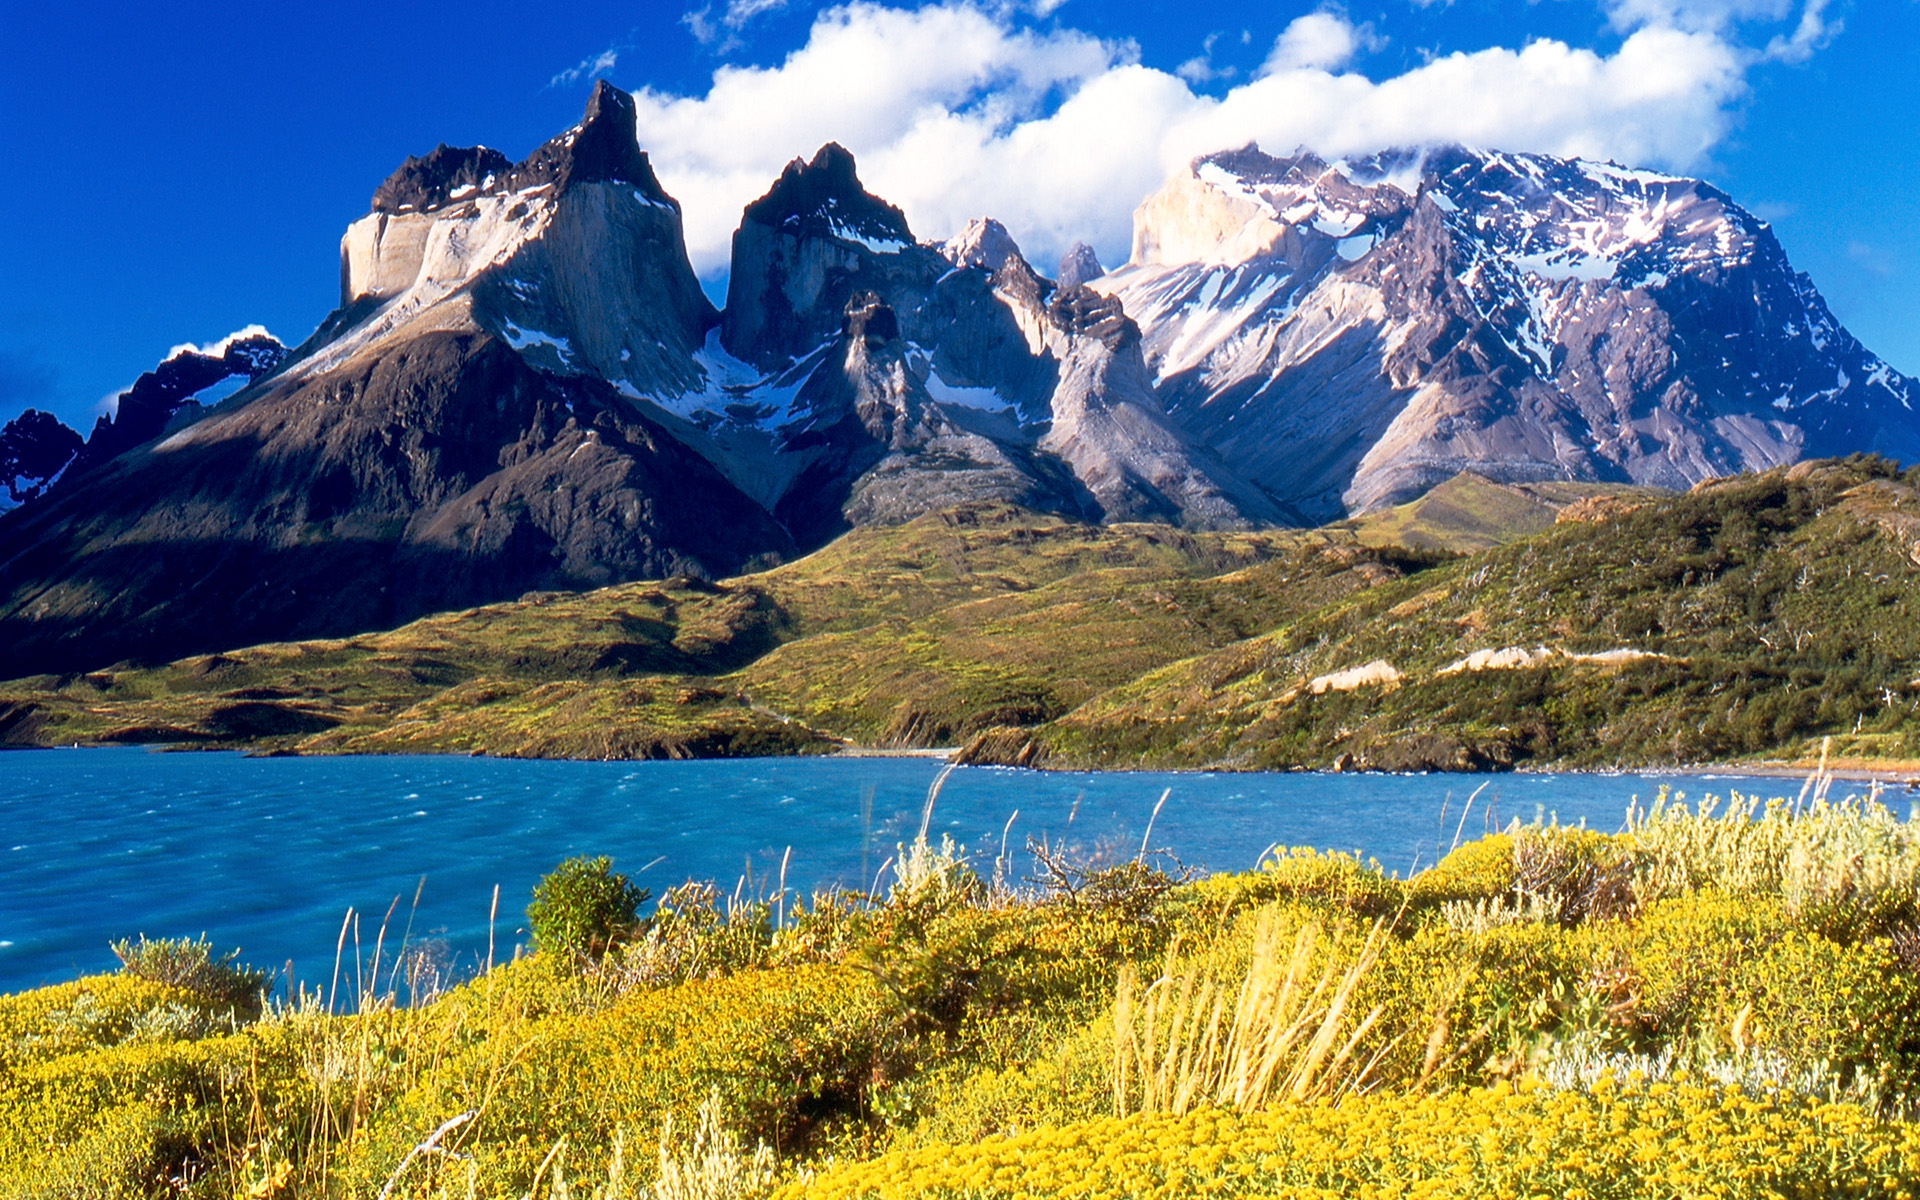  Torres del Paine National Park, Chile - Quelle: WikiCommons